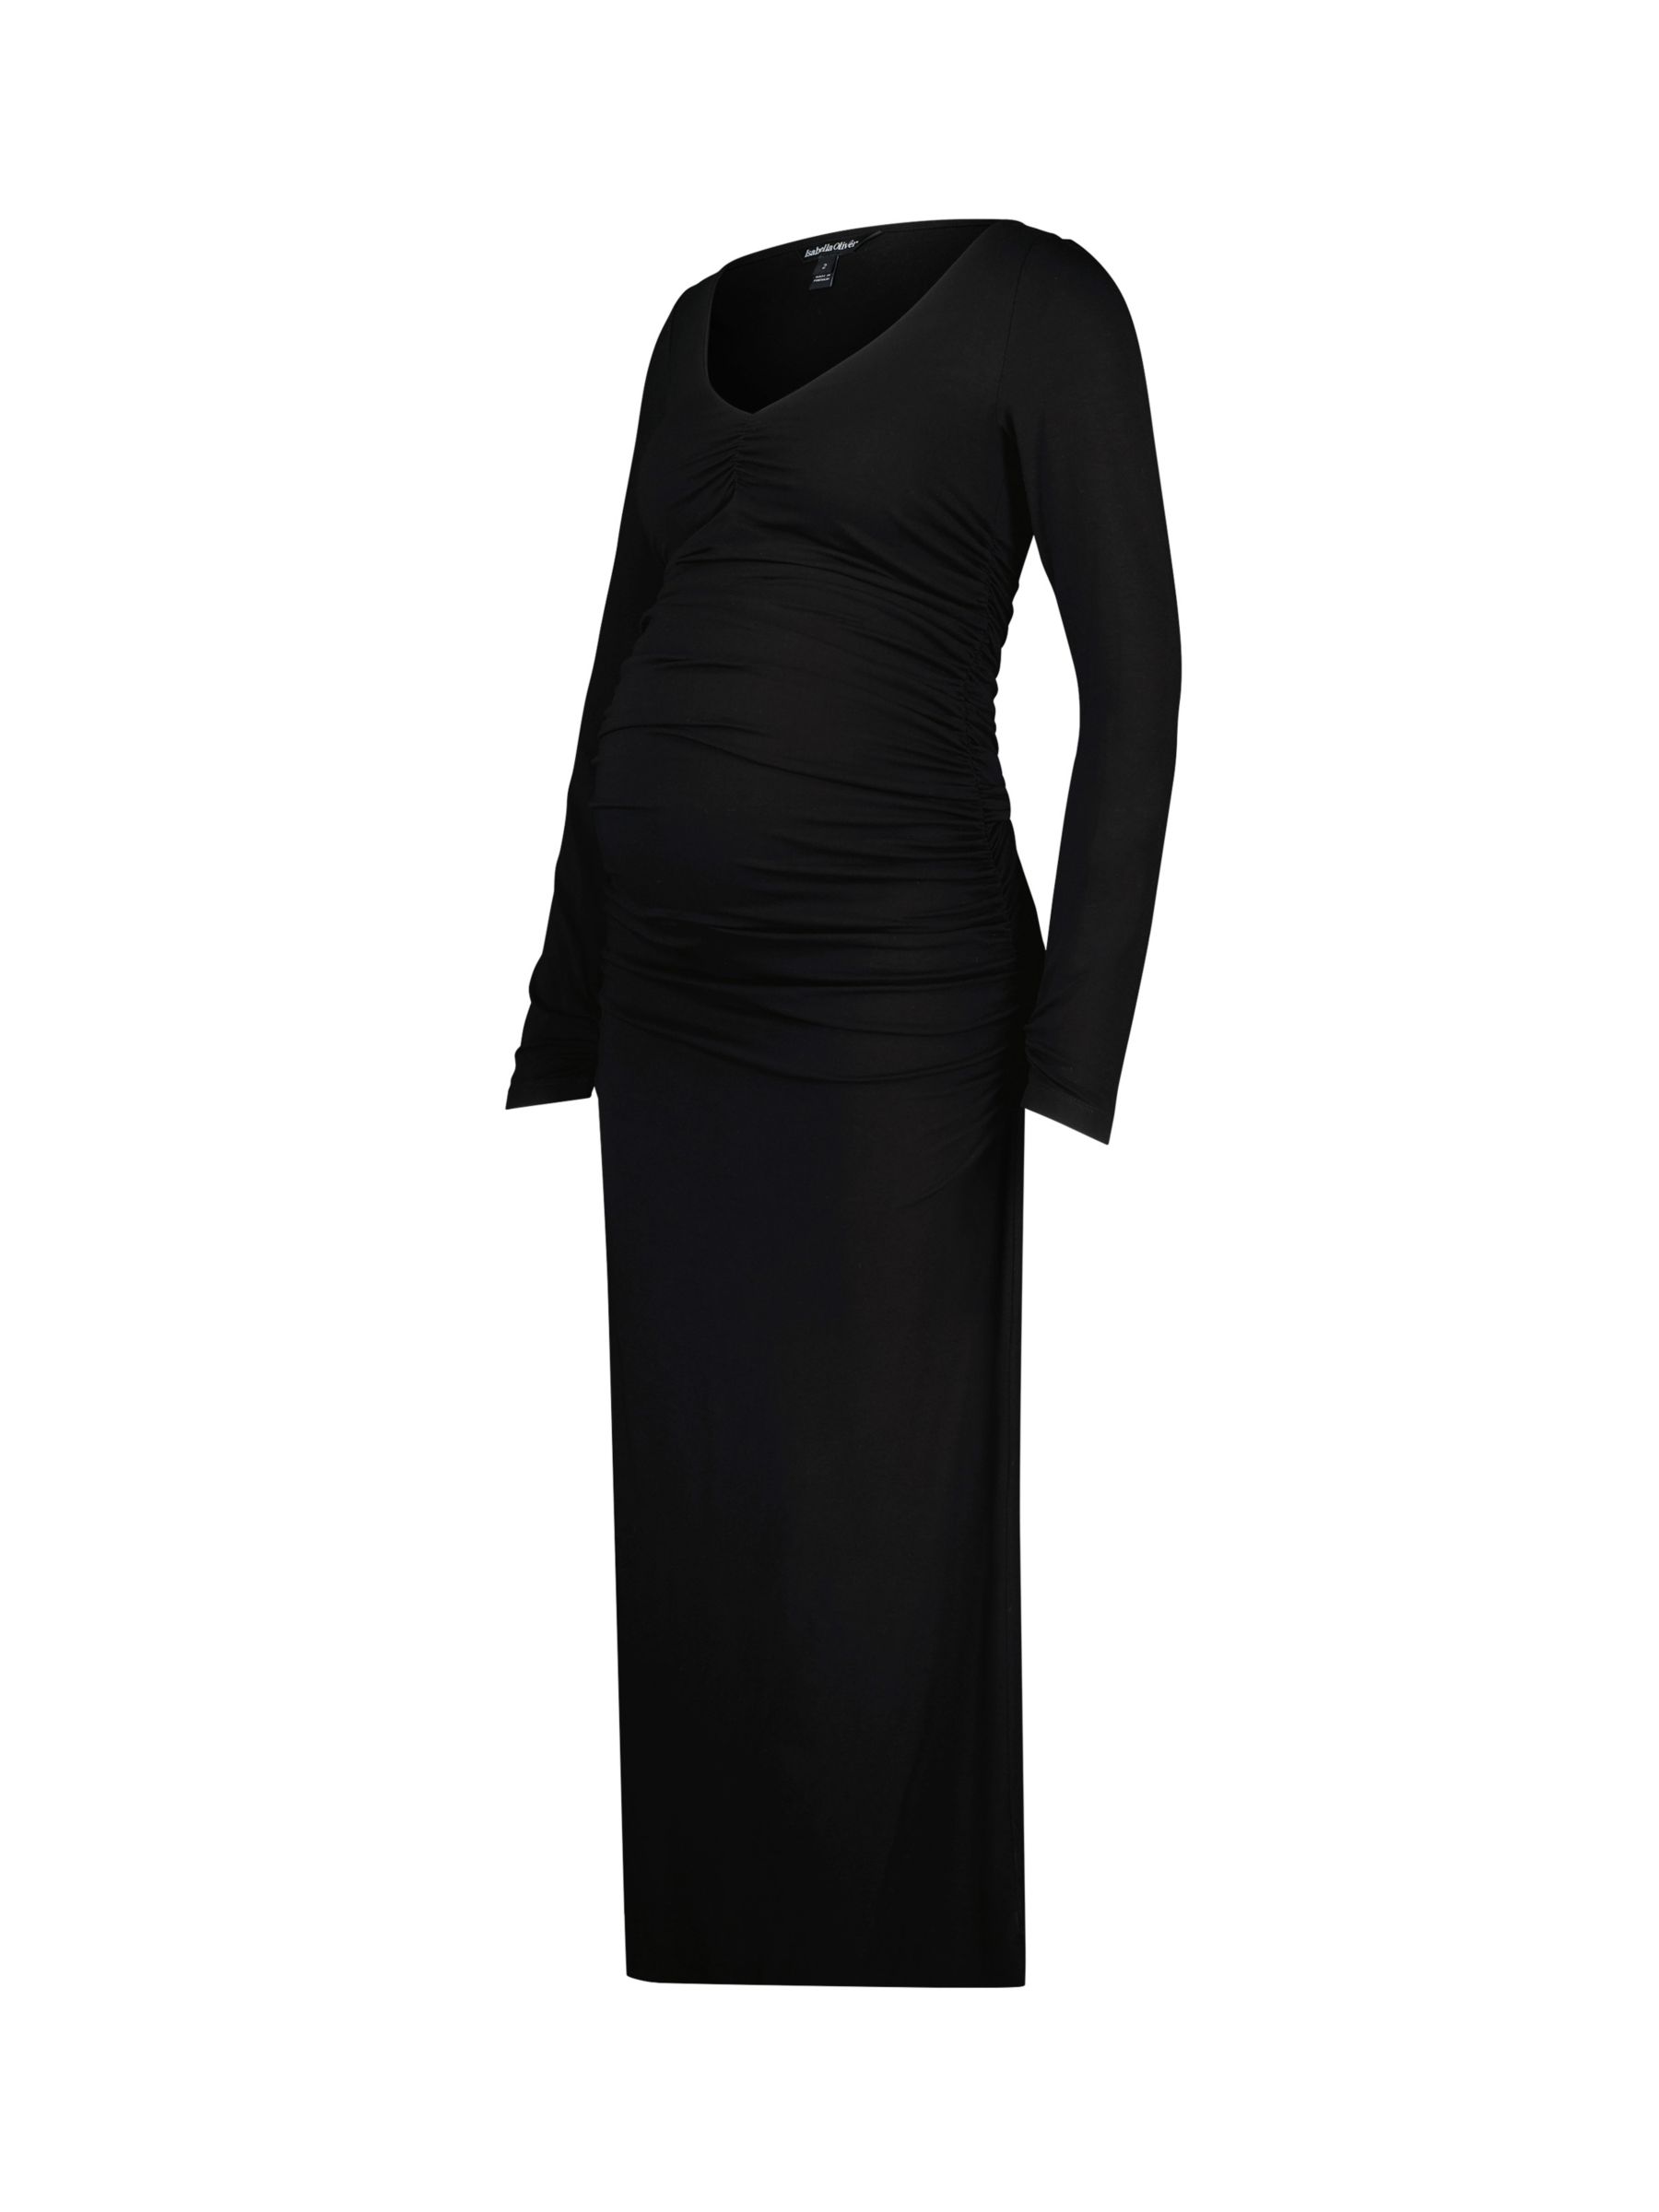 Isabella Oliver Hyacinth Maternity Maxi Dress, Caviar Black, 4-6